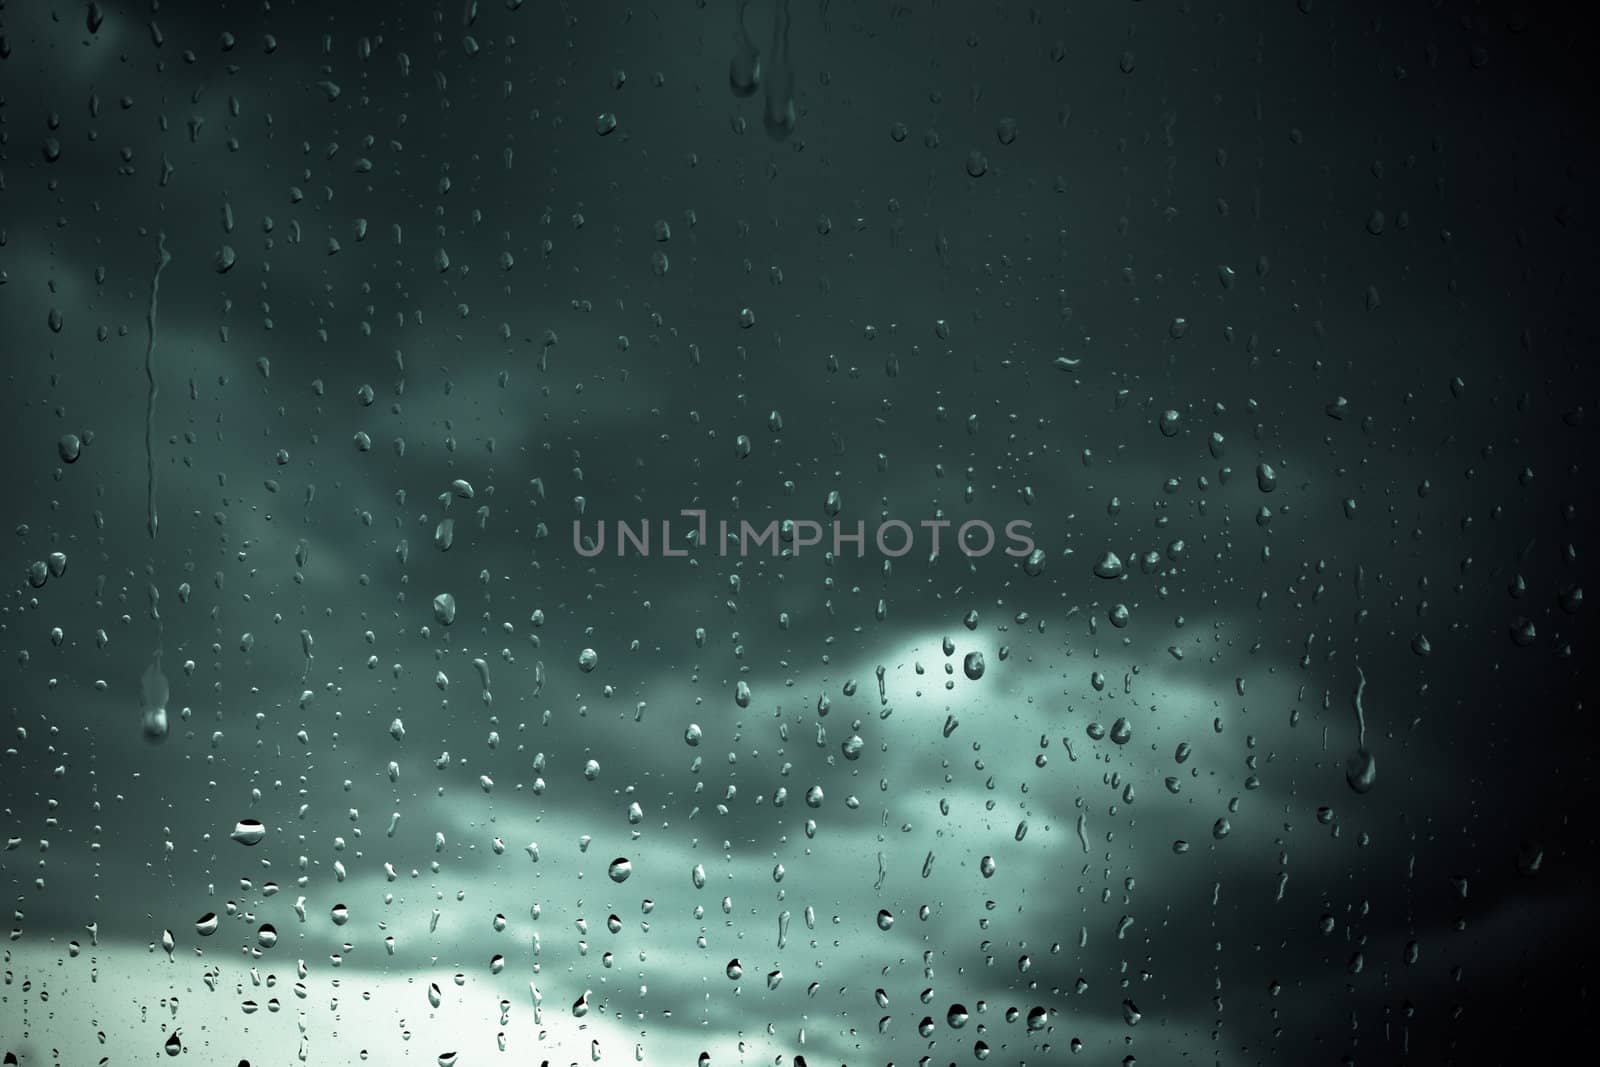 Rain drops on a window, close-up